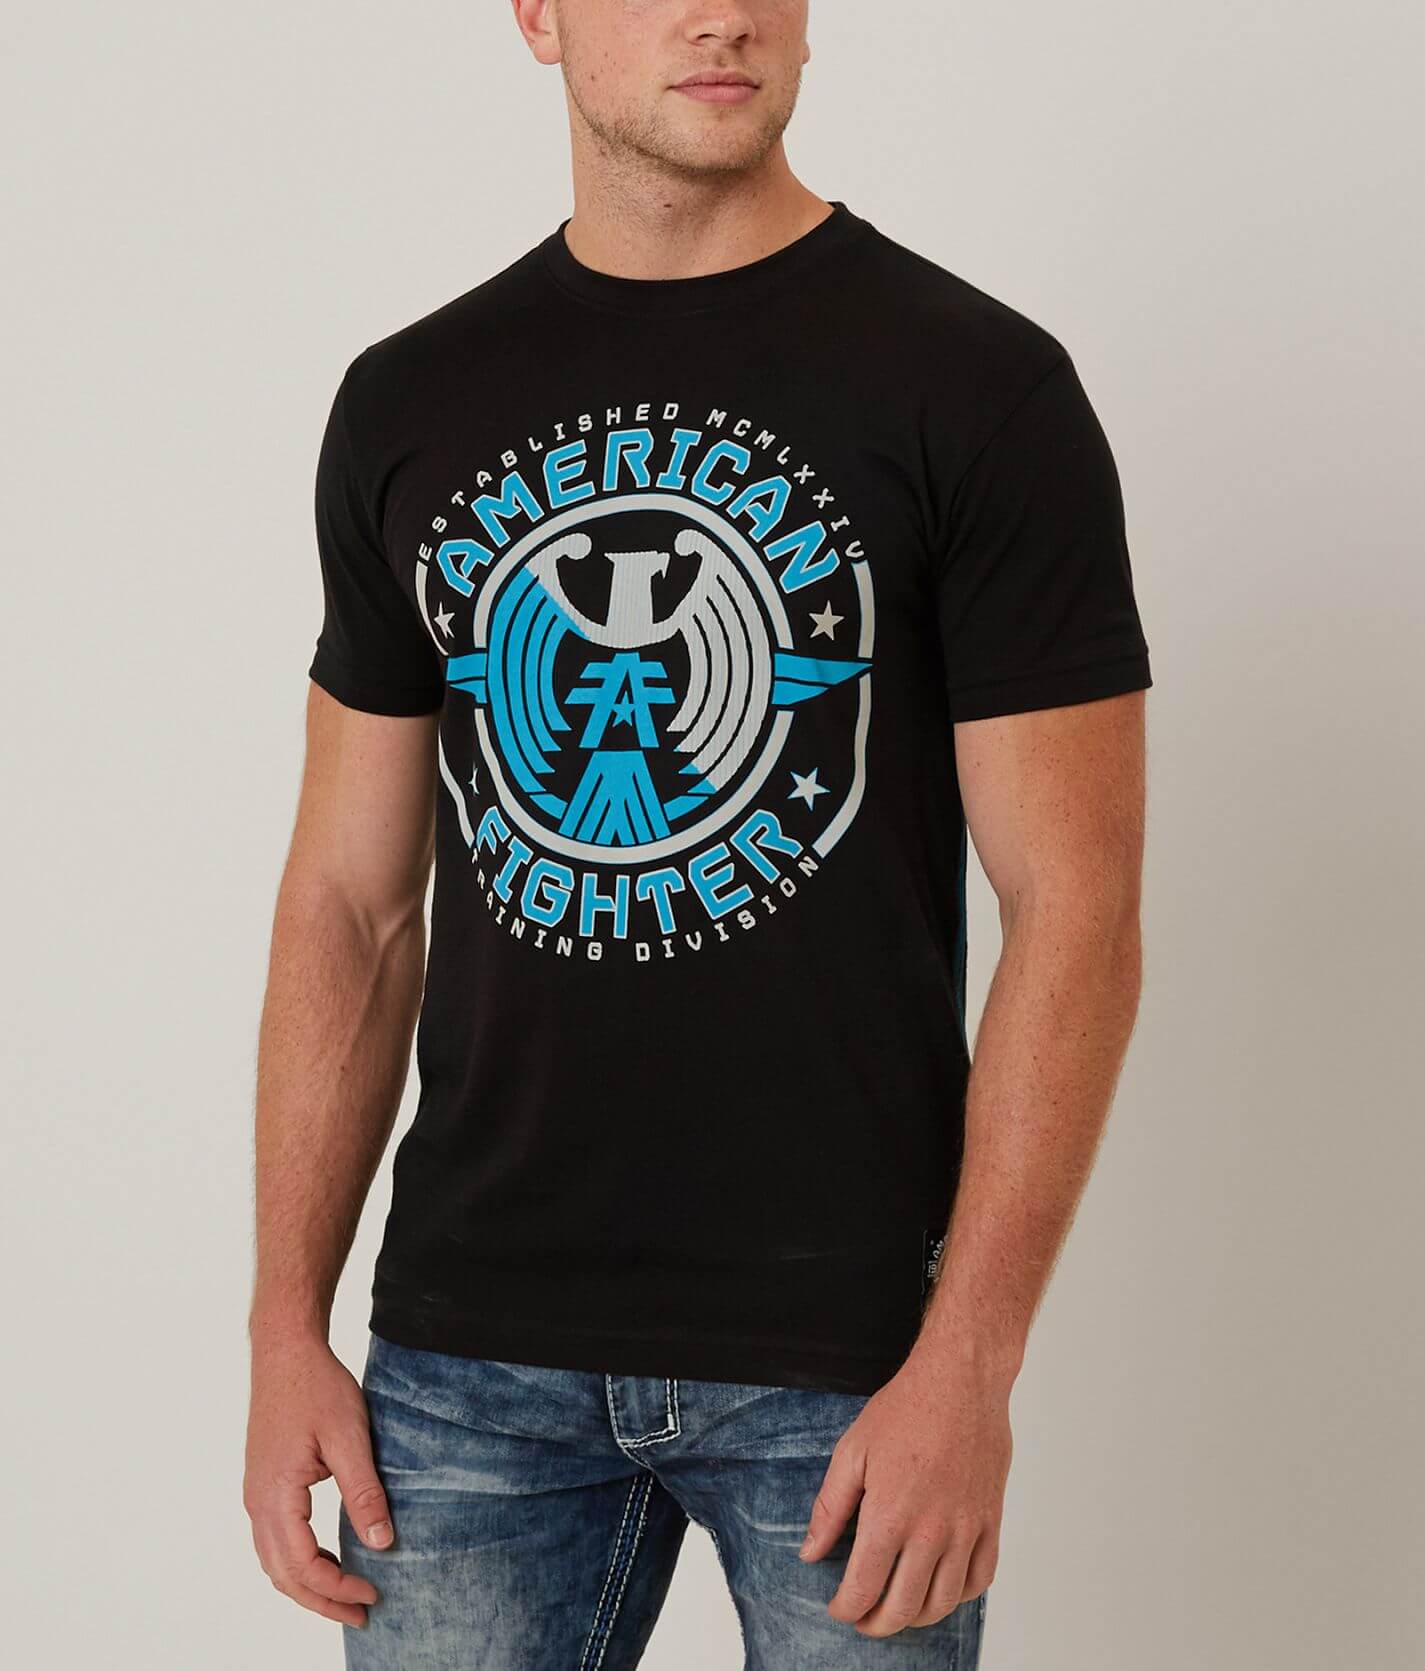 Klan lærling motto American Fighter Wiley T-Shirt - Men's T-Shirts in Black | Buckle